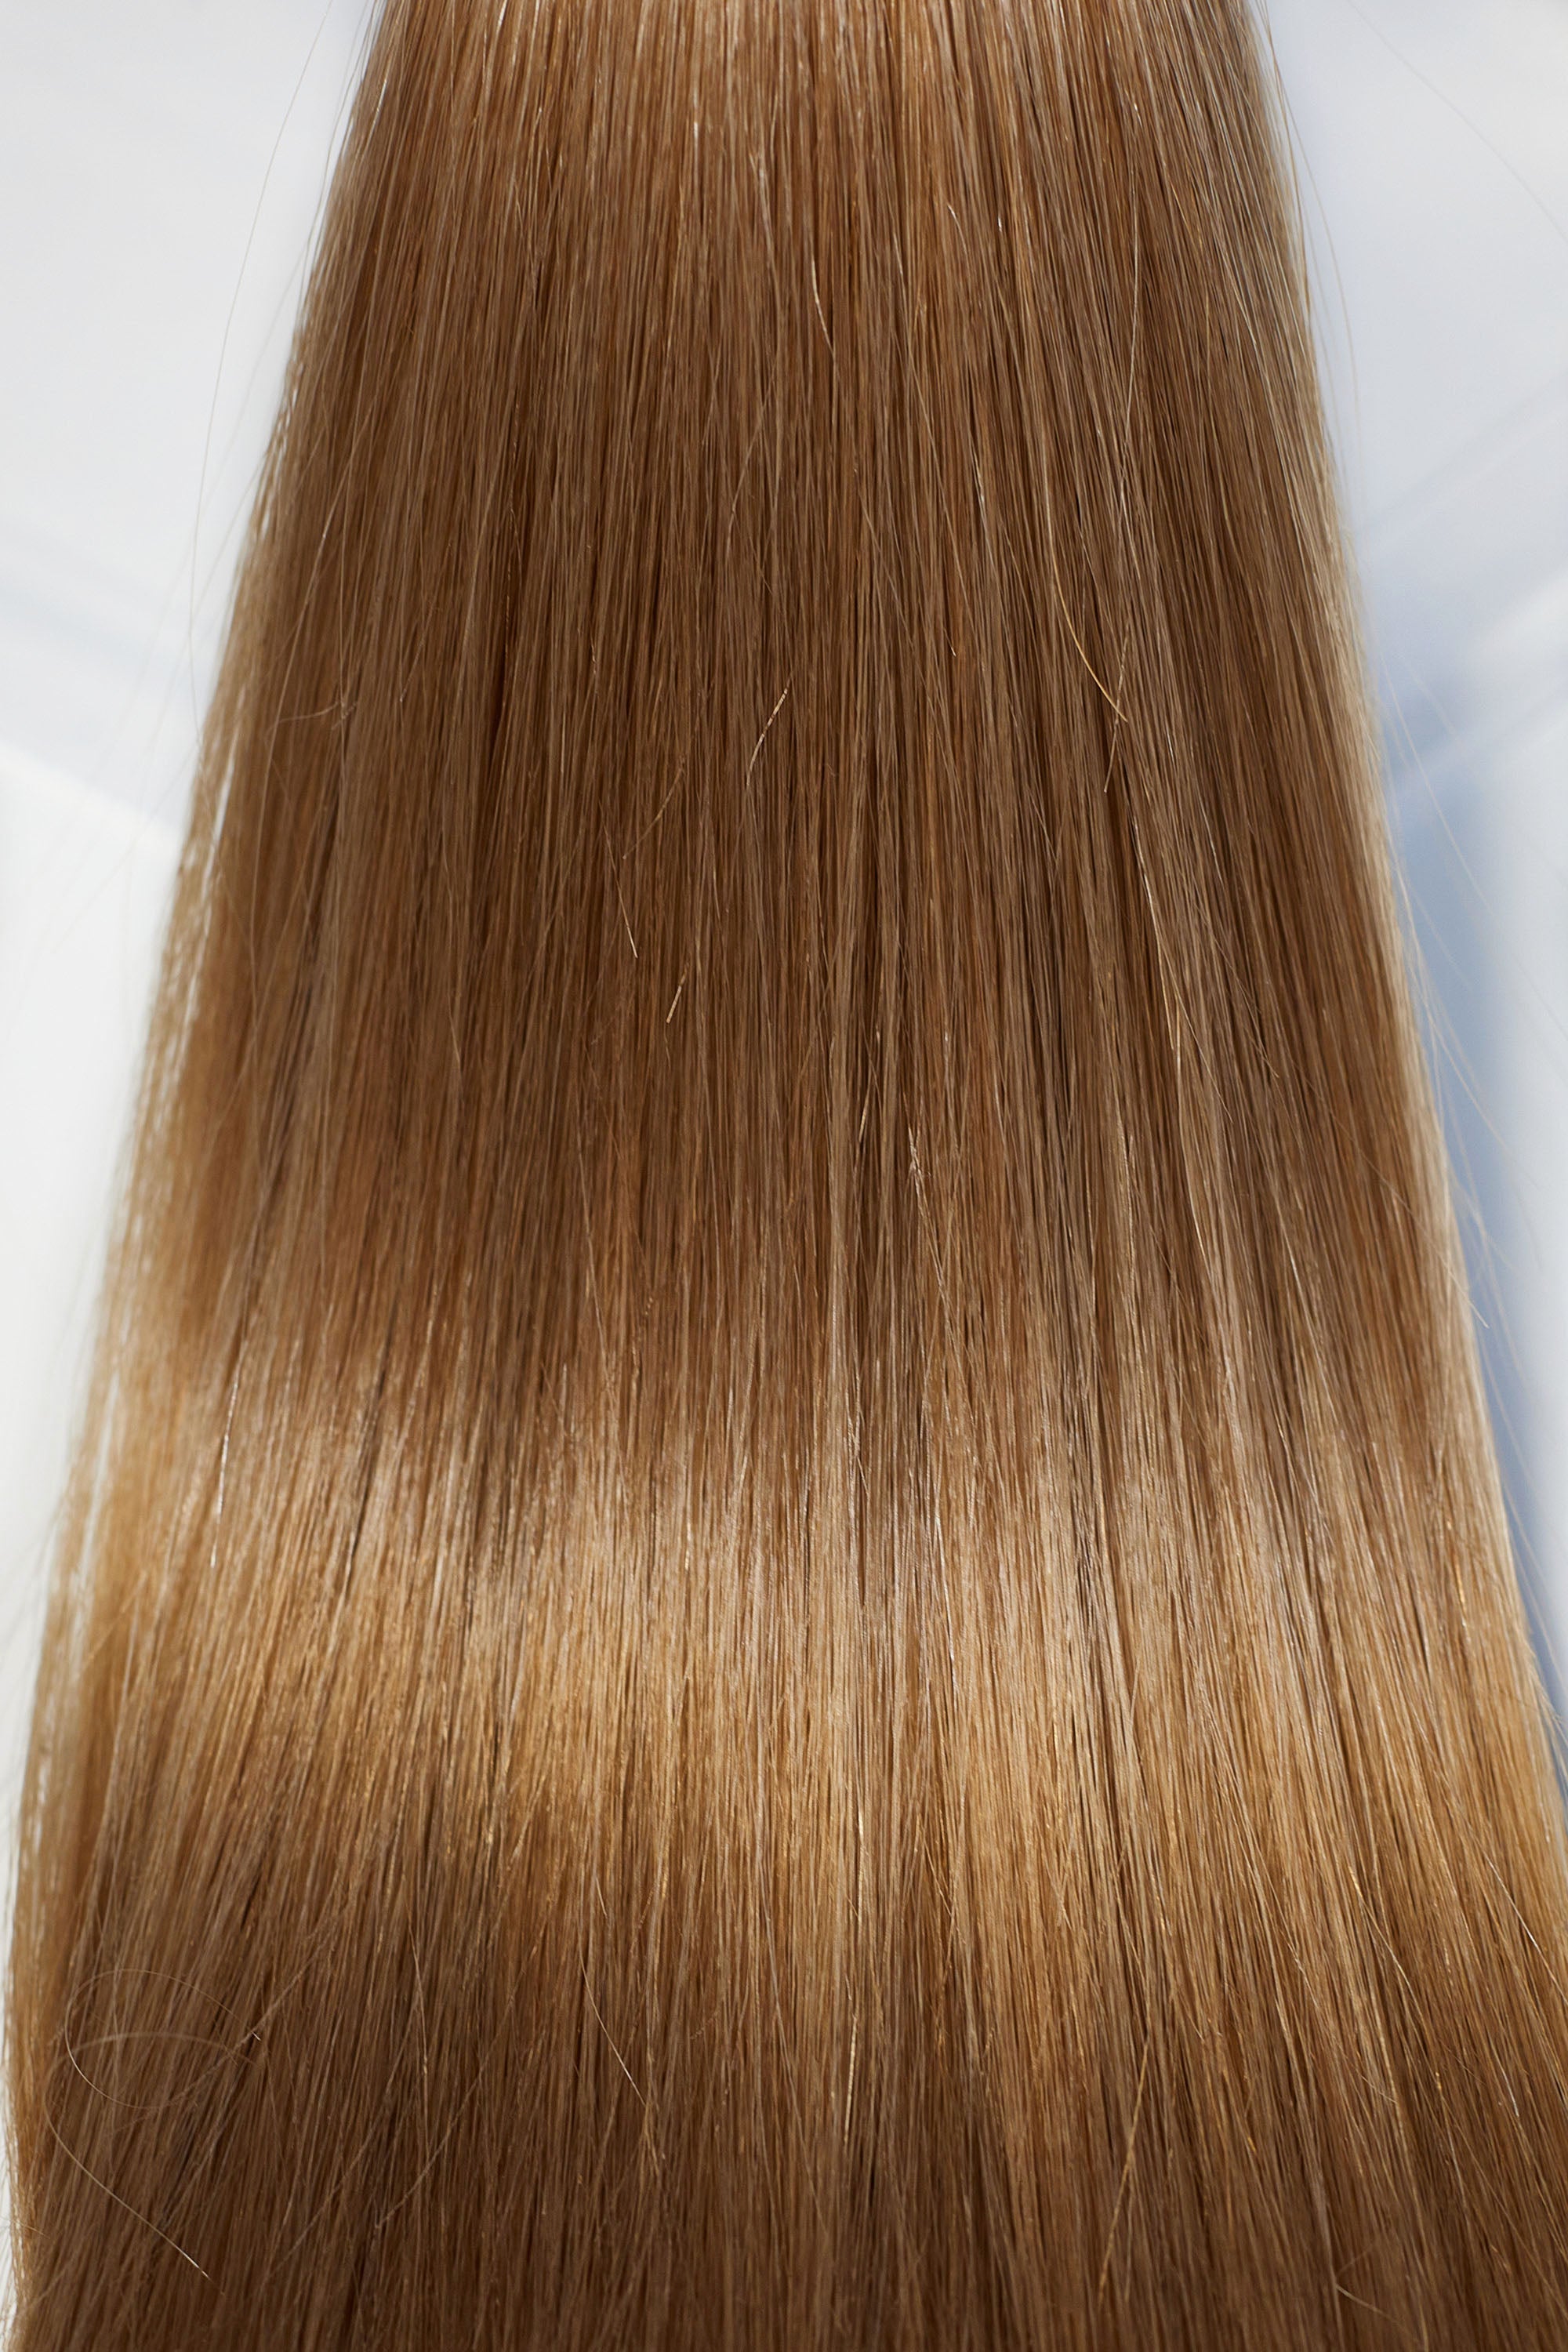 Behair professional Keratin Tip "Premium" 20" (50cm) Natural Straight Caramel Brown #8 - 25g (Micro - 0.5g each pcs) hair extensions